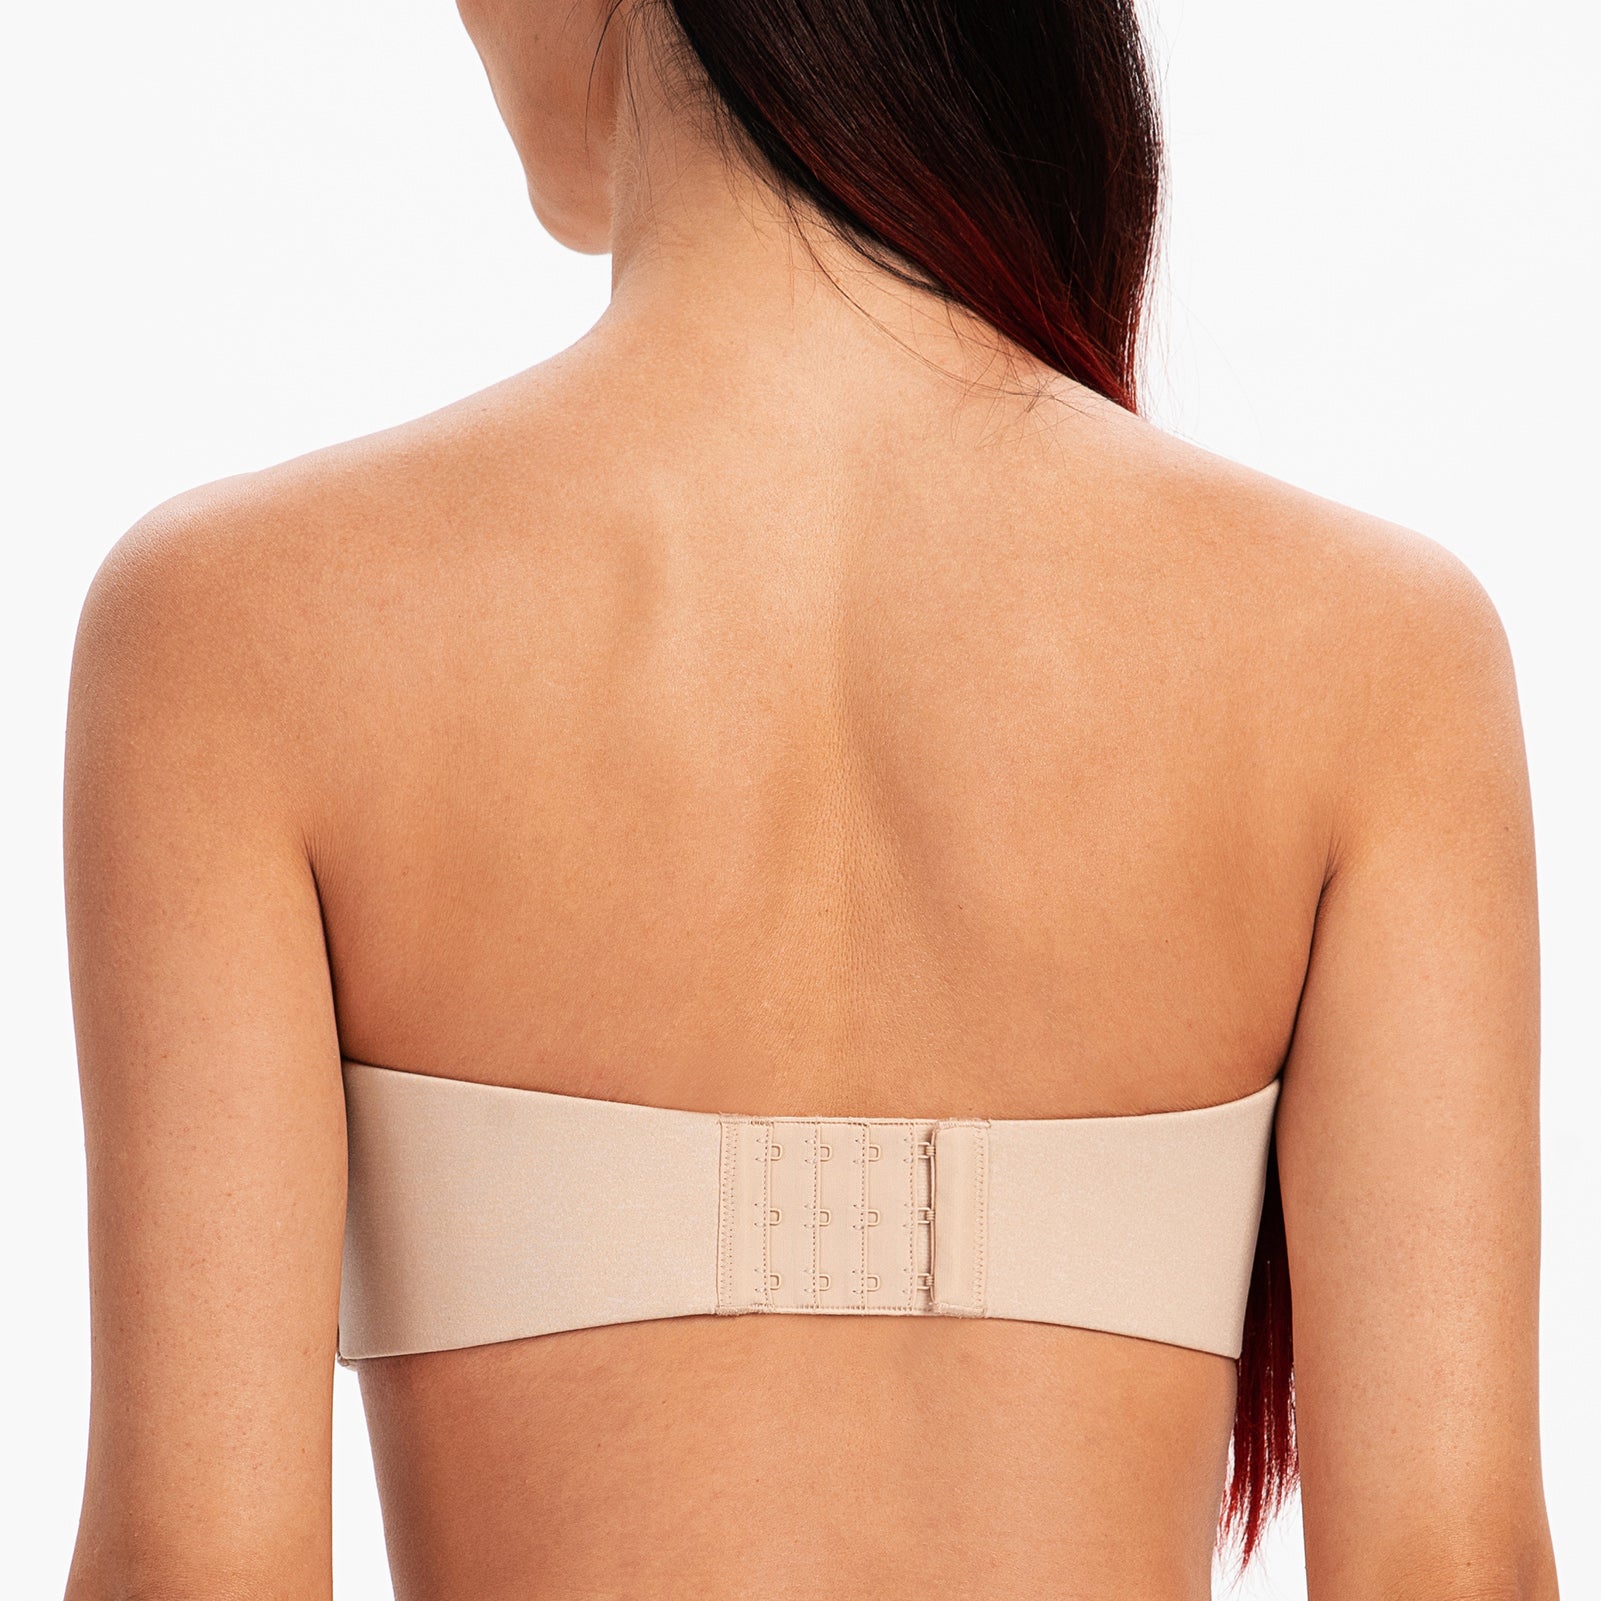 MELENECA Women's Full Coverage Underwire Bra Minimizer Plus Size Lace  Comfortable Cushion Strap